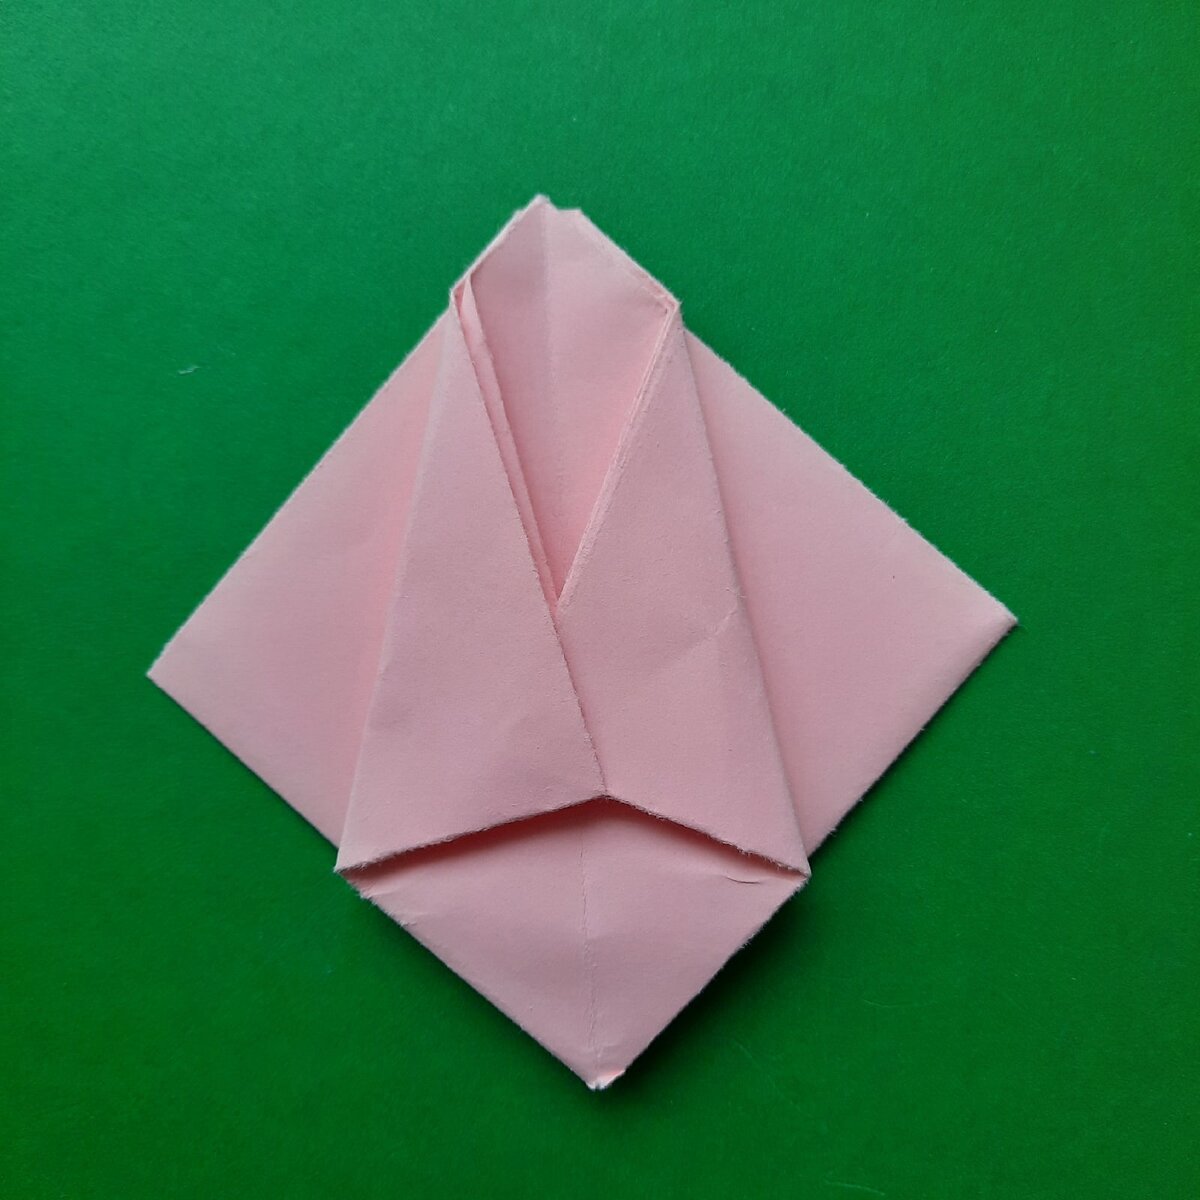 Оригами: тюльпан из бумаги